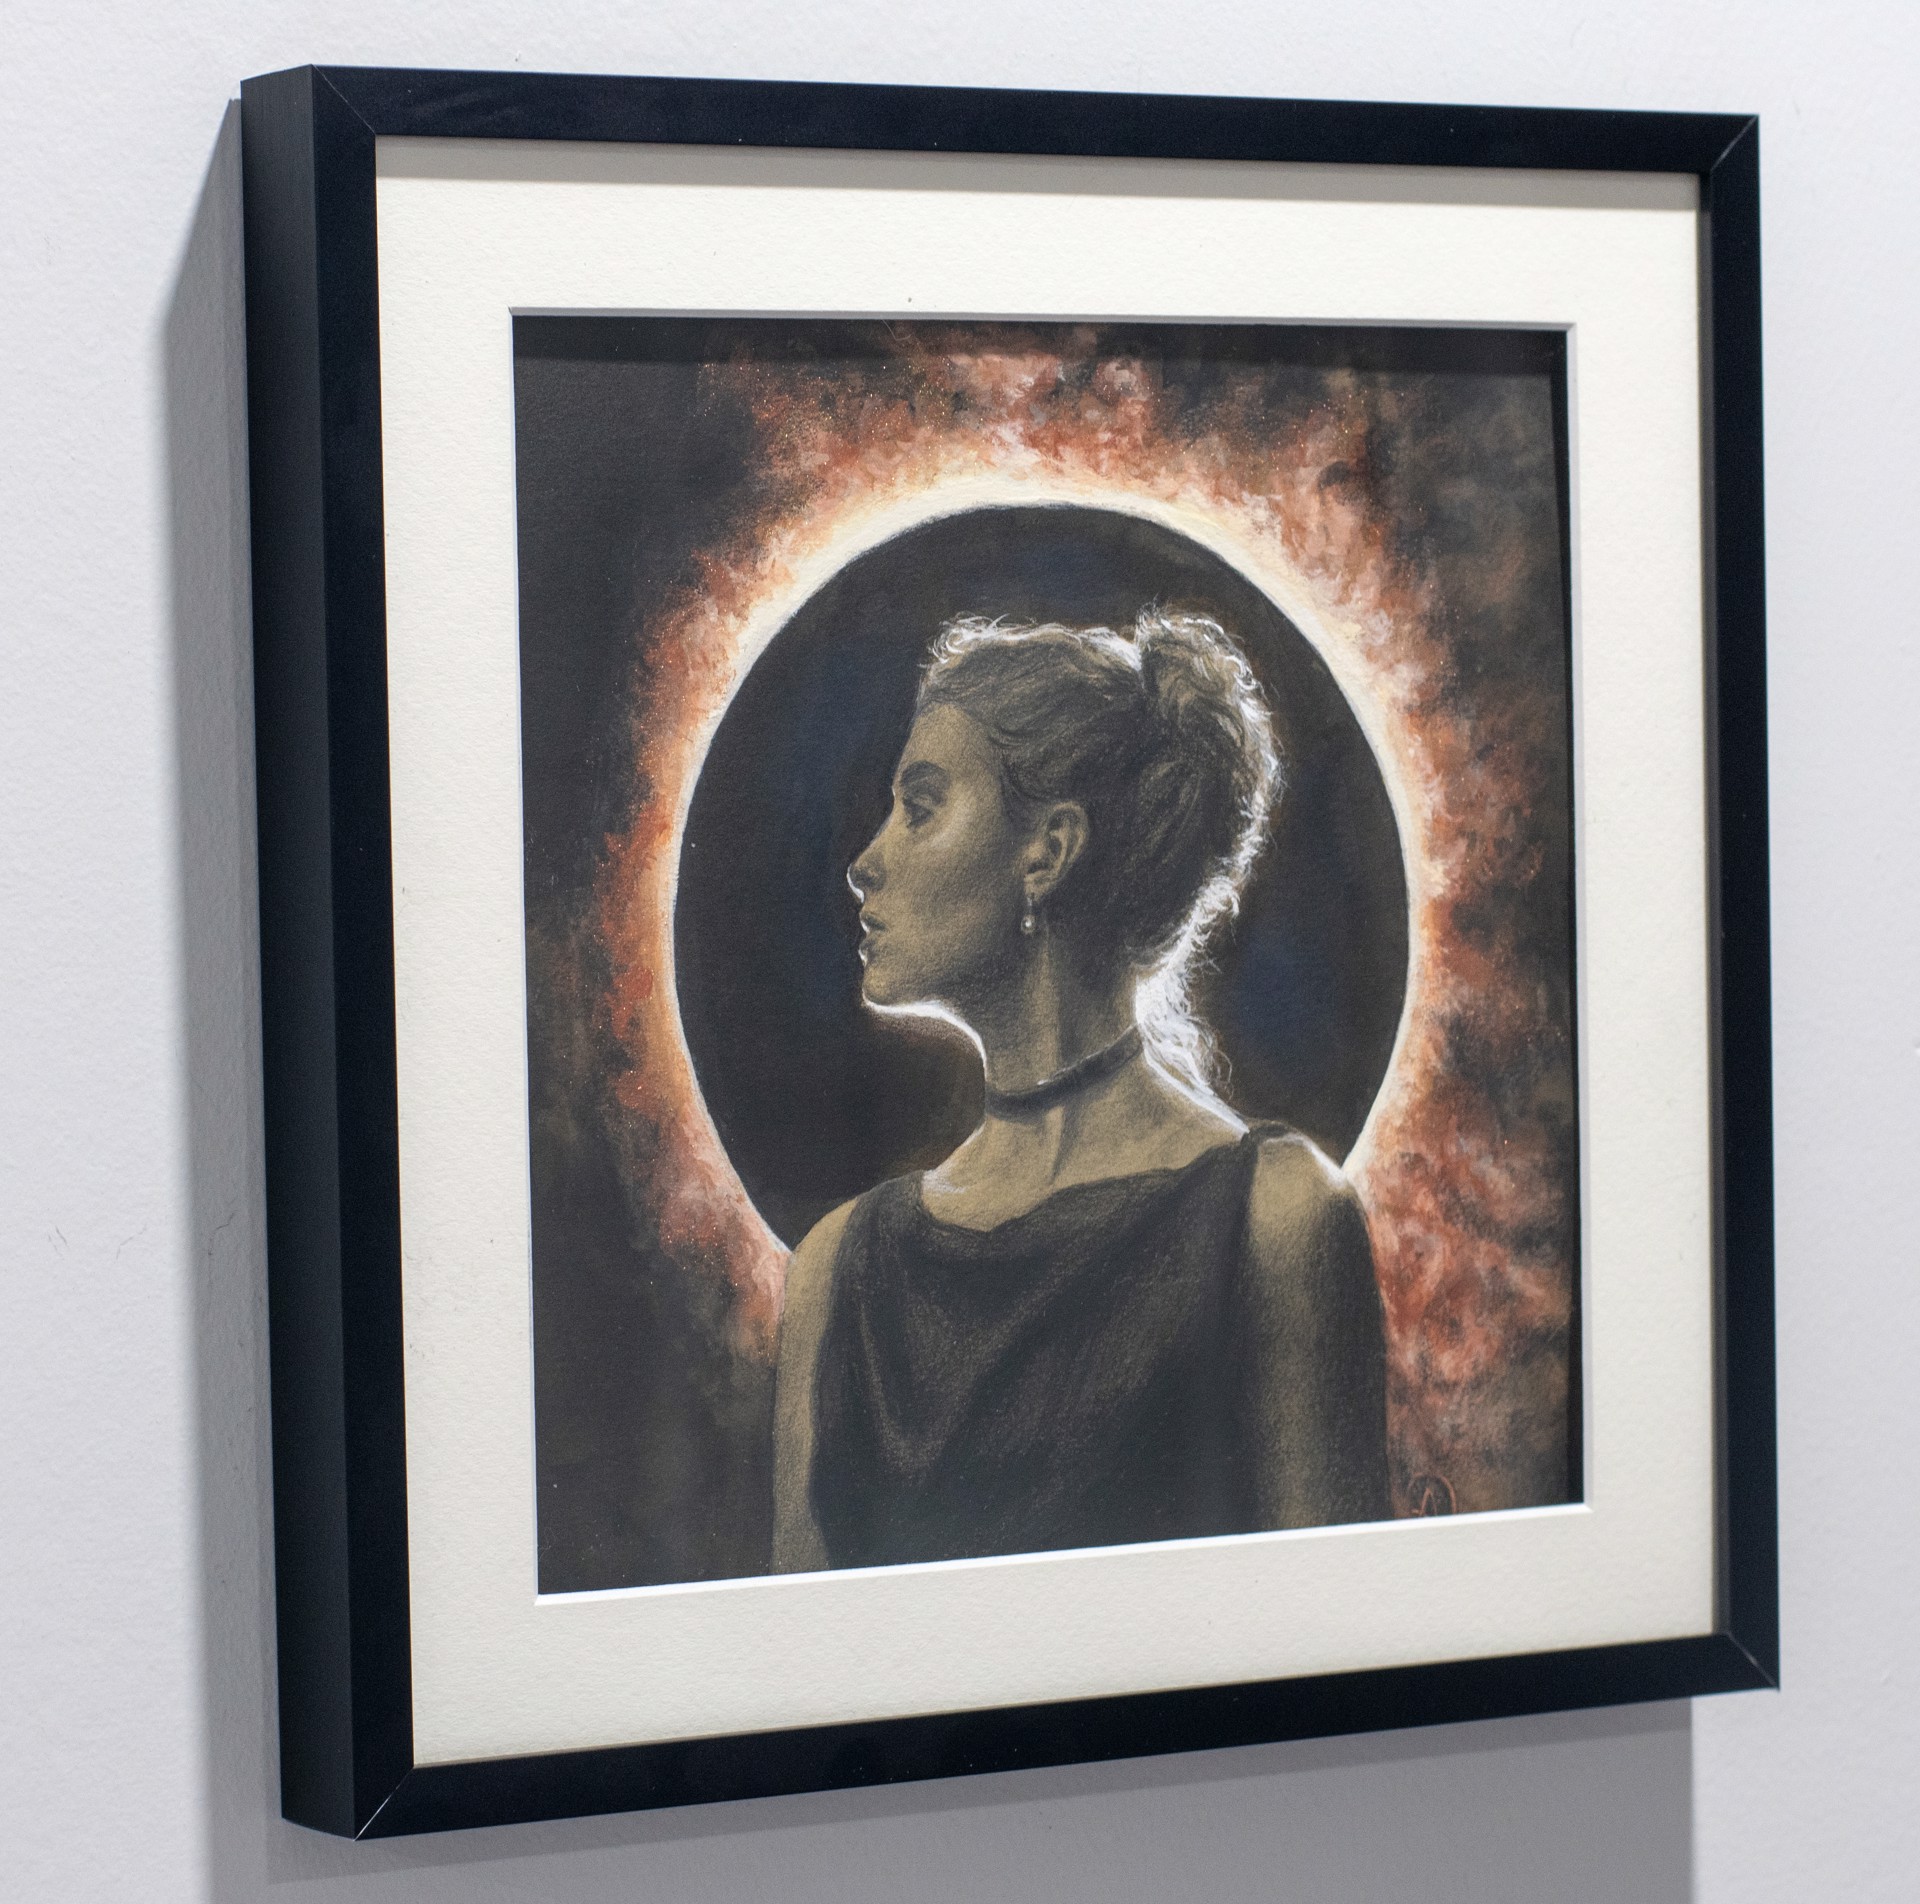 Eclipse by Alexandra Verhoven